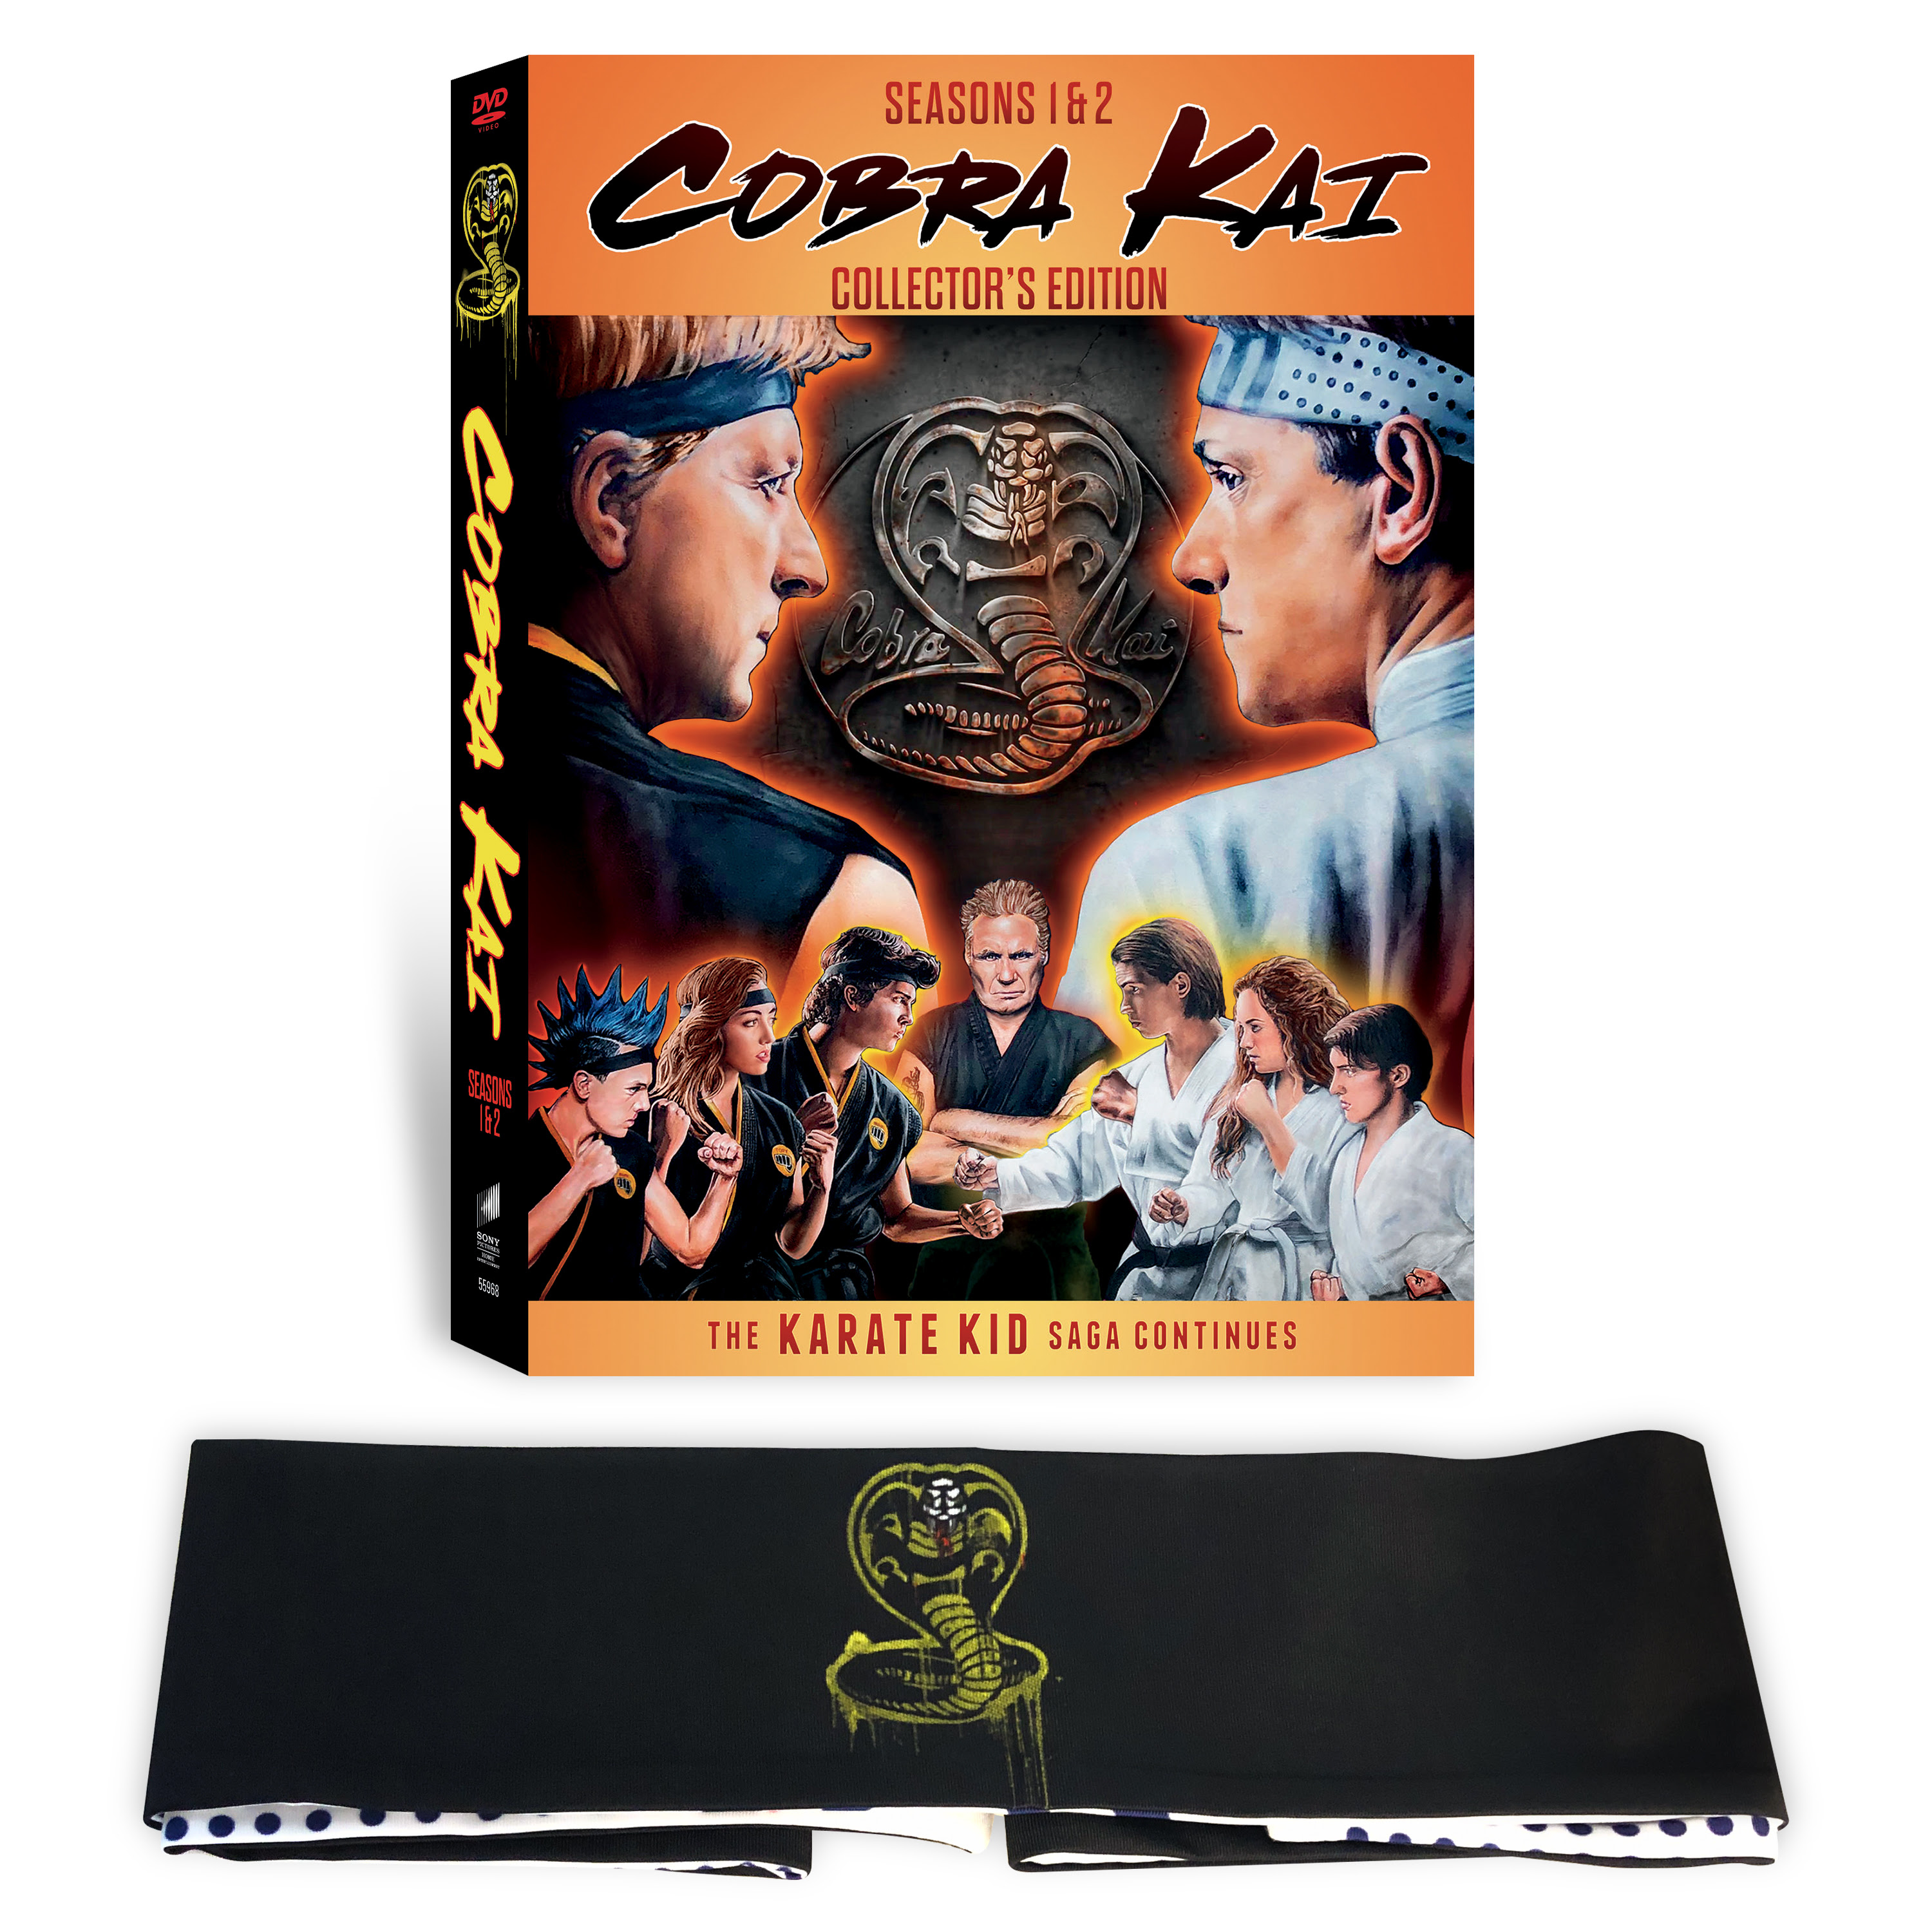 Cobra Kai Season 1 and 2 DVD